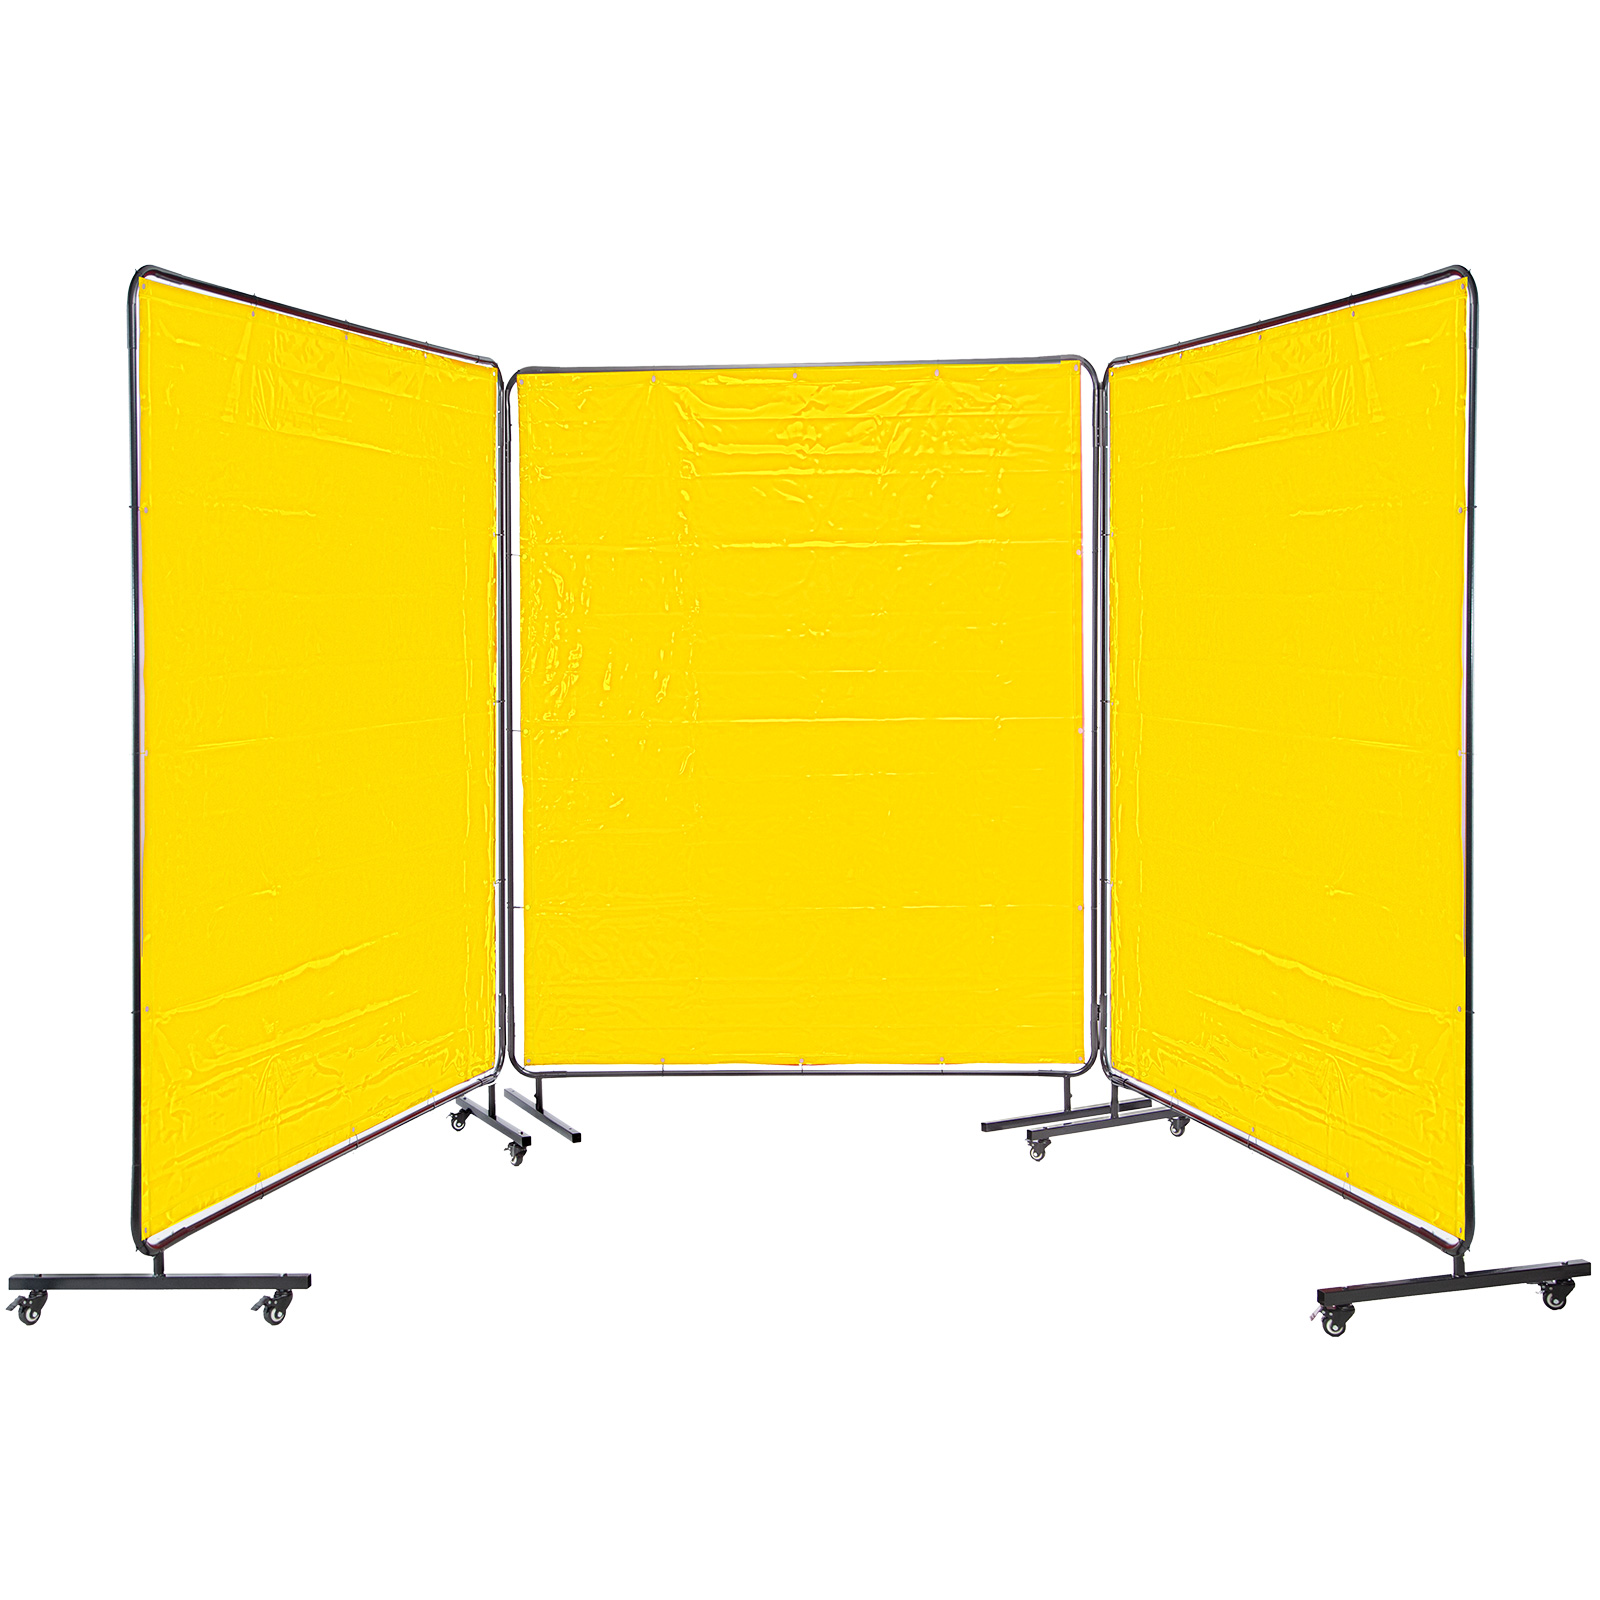 Vevor 3 Panel Welding Screen 6' X 6' Welding Curtain Flame Retardant, Yellow от Vevor Many GEOs